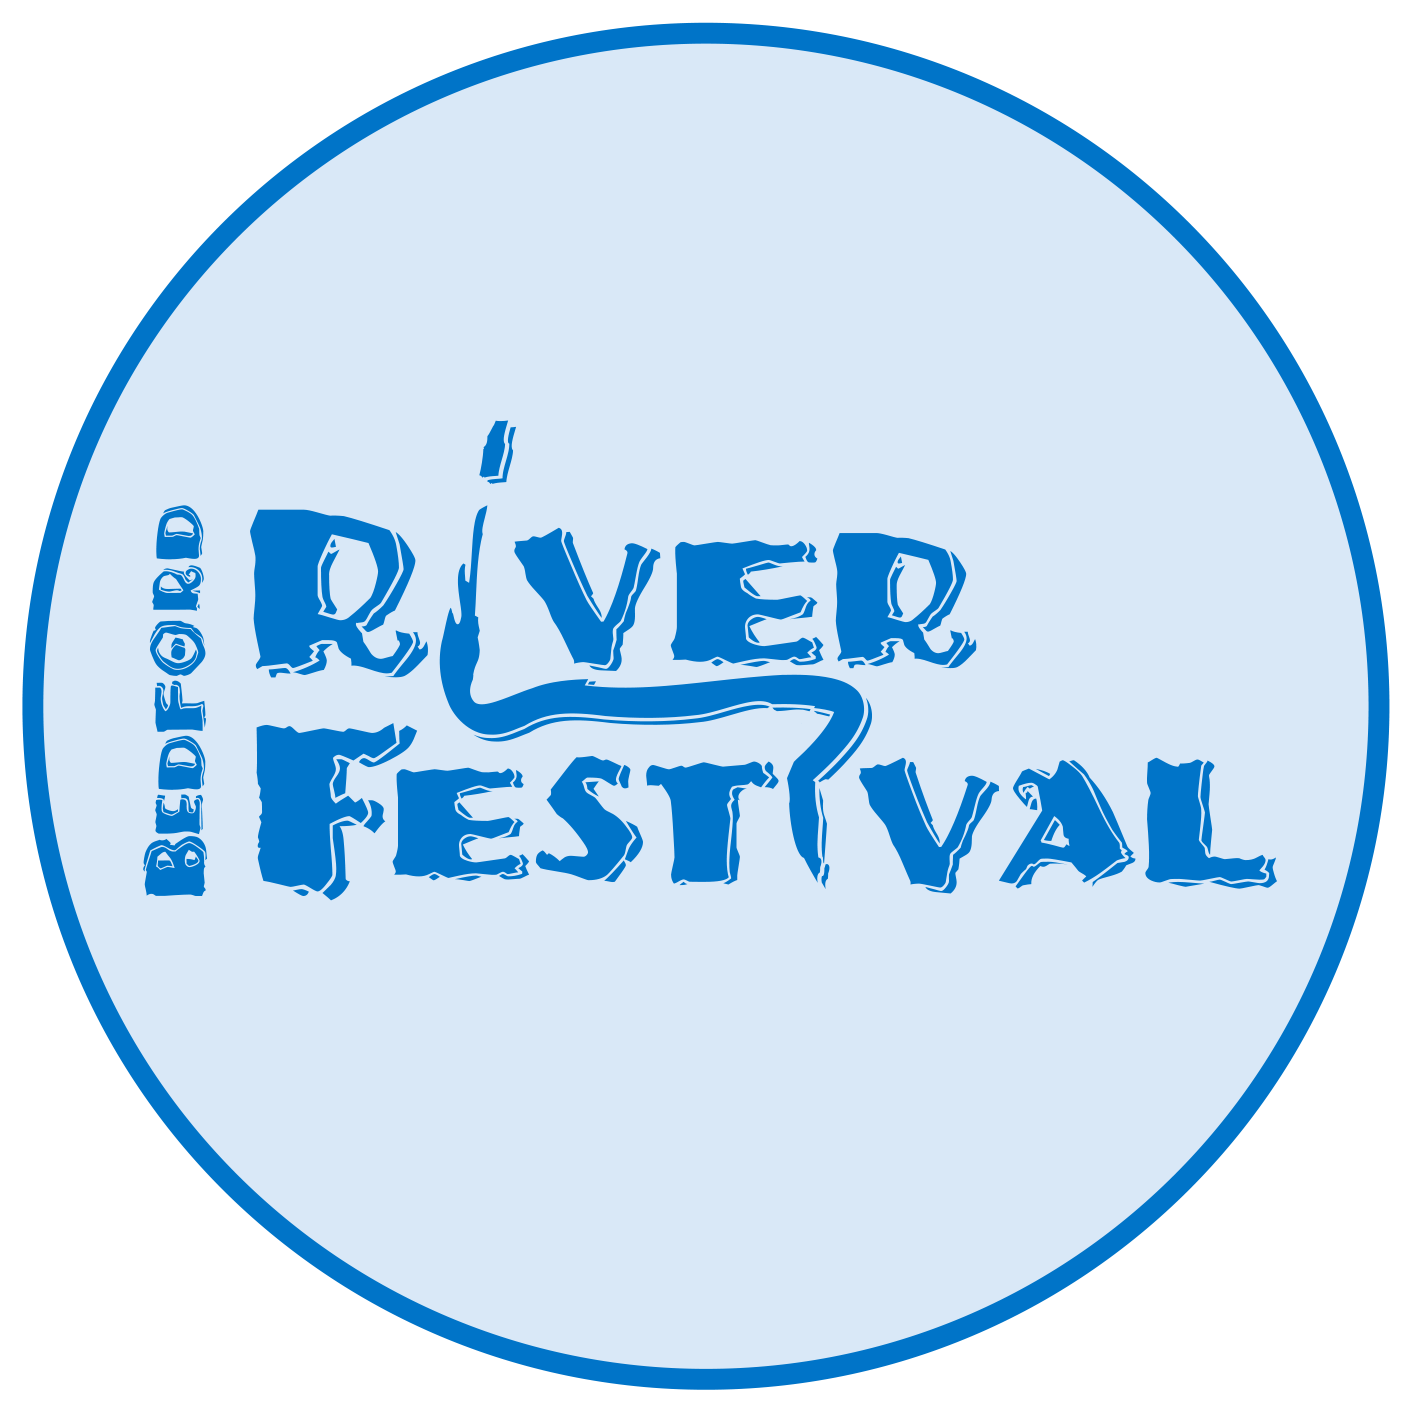 Bedford River Festival logo